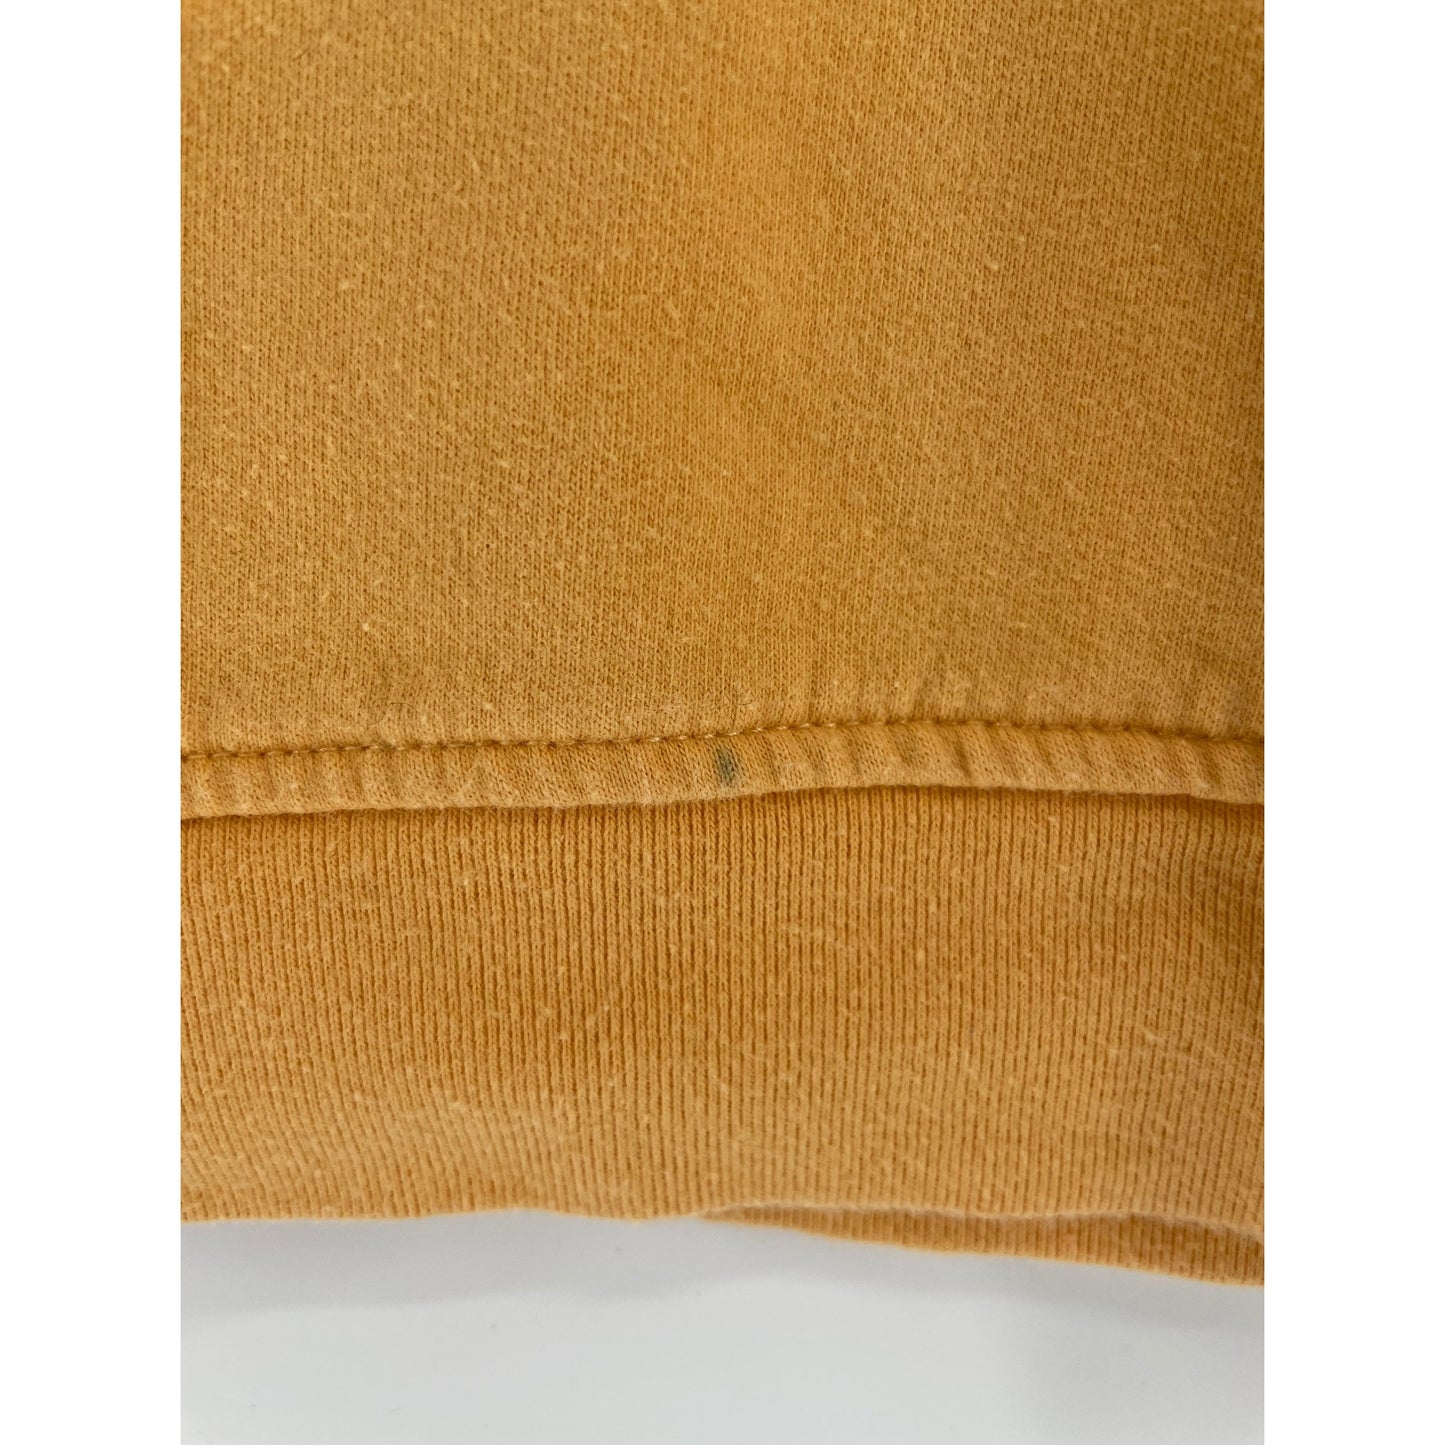 Breckenridge Women’s Size Medium Orange Sweatshirt W/ Flowers & Rhinestones